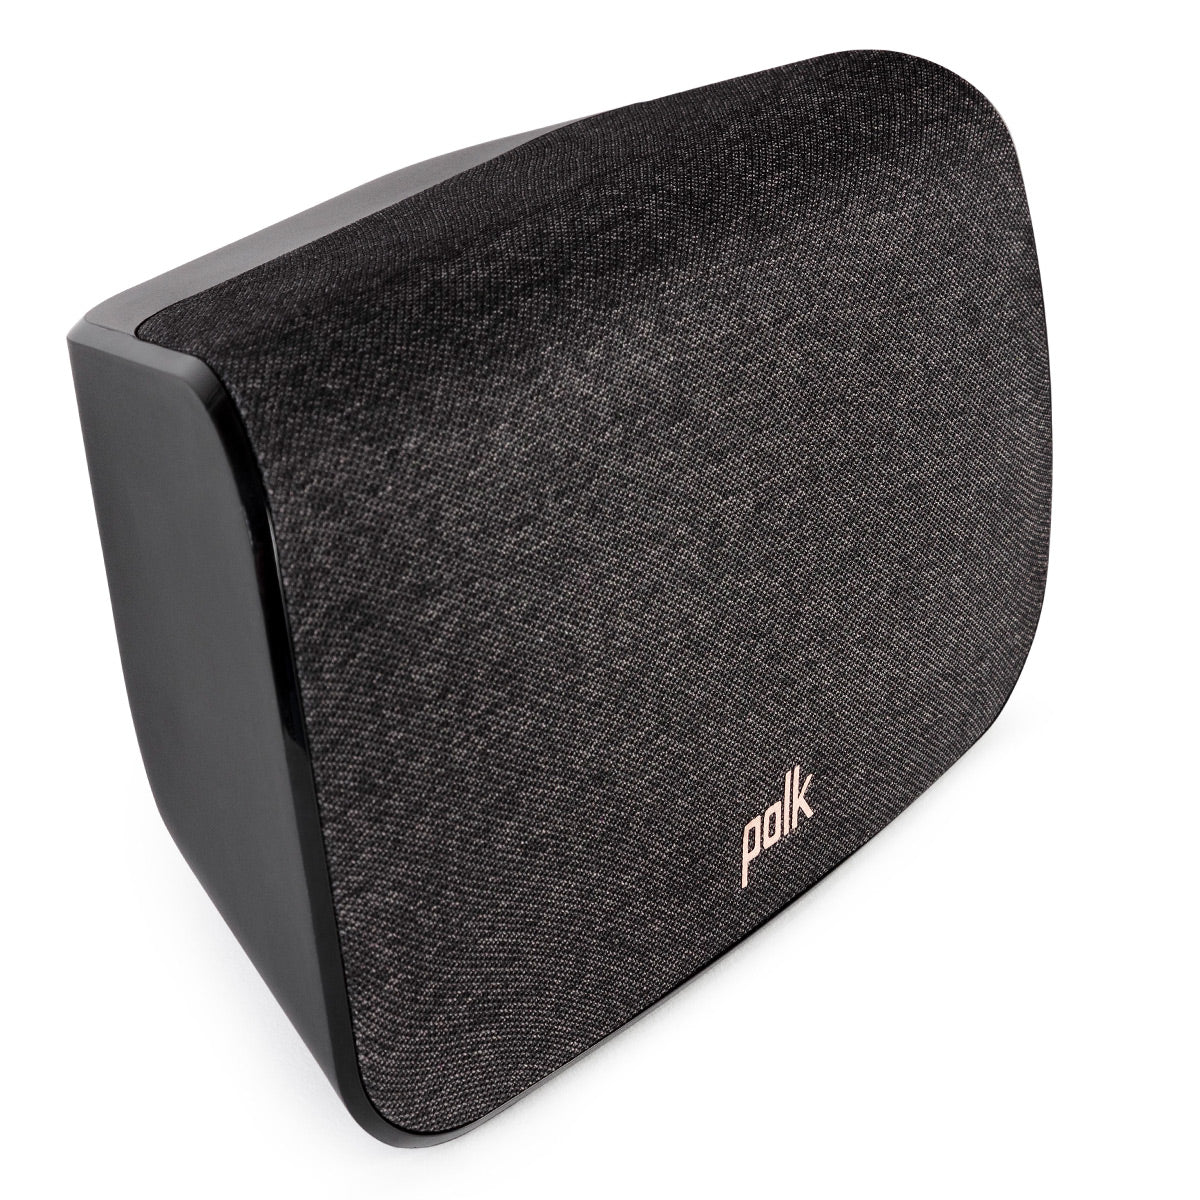 Polk Audio SR2 Wireless Surround Speakers for React Series Sound Bar - Pair